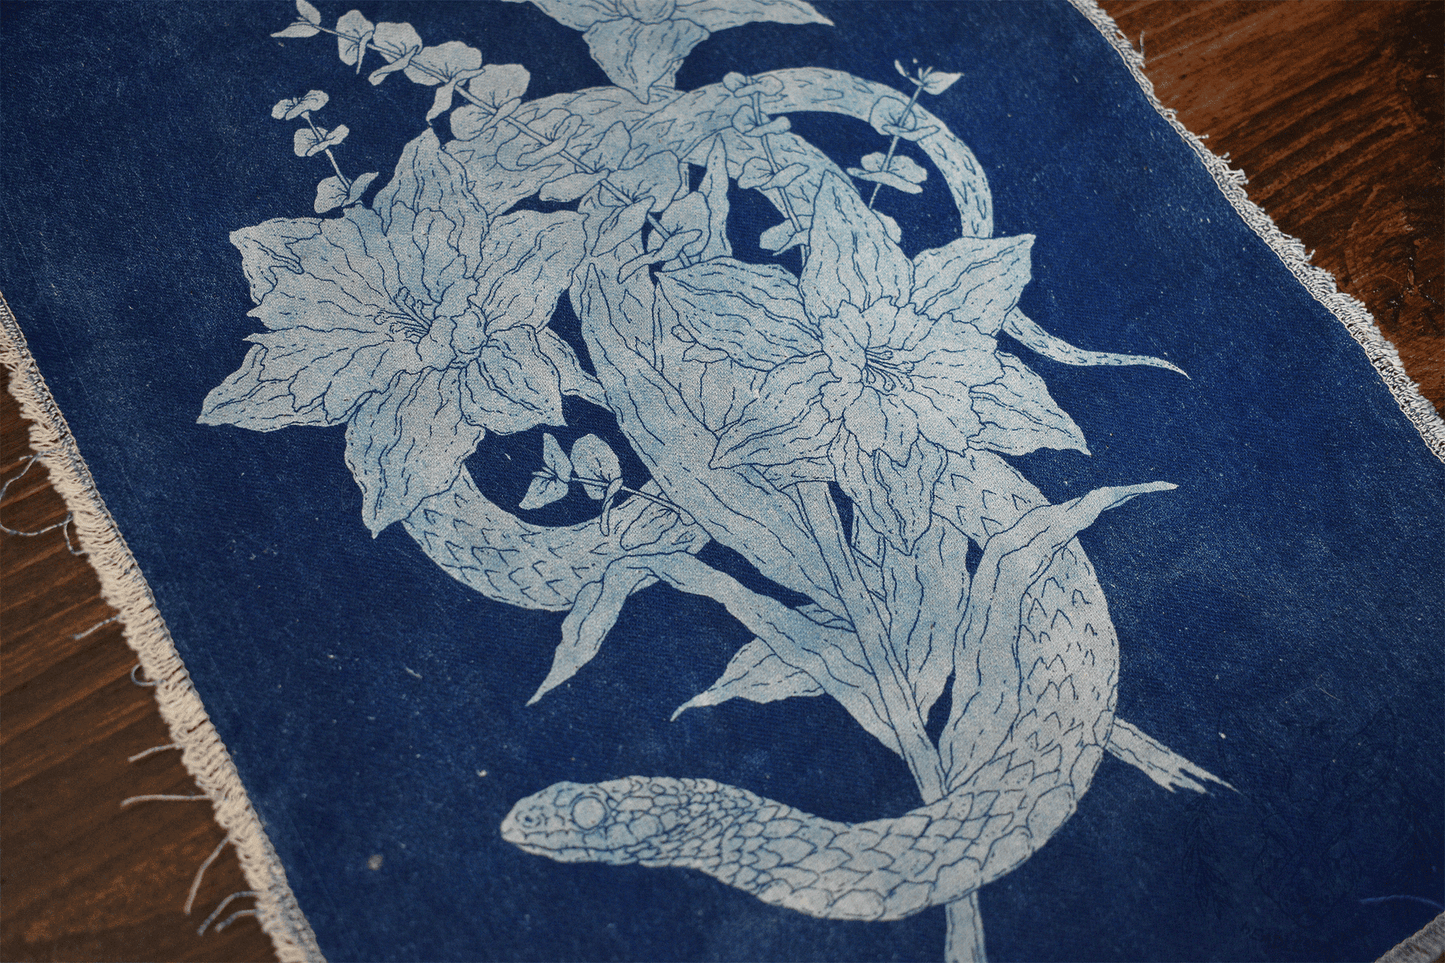 Original-Tethered-Fabric-Cyanotype-Sun_Print-Artwork-Snake-Flowers